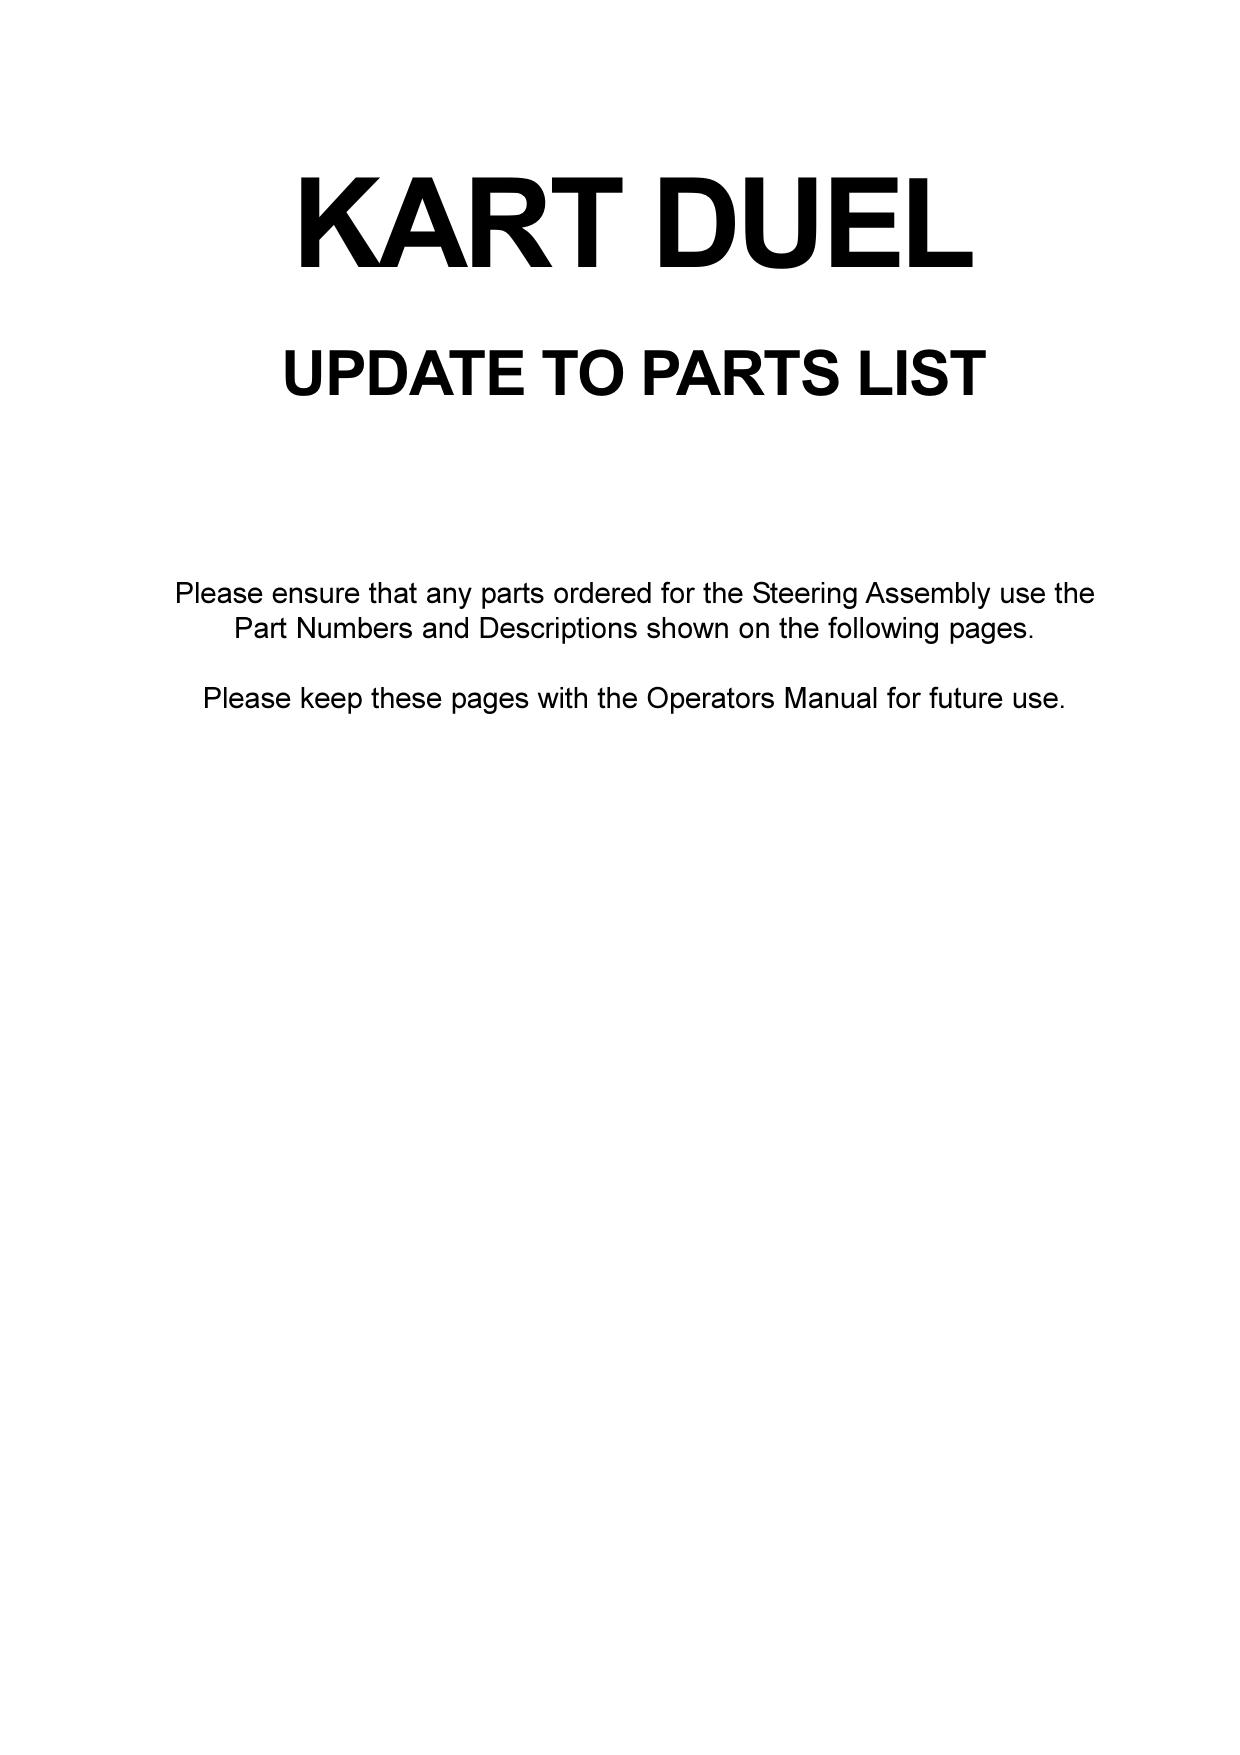 Parts Steering Update